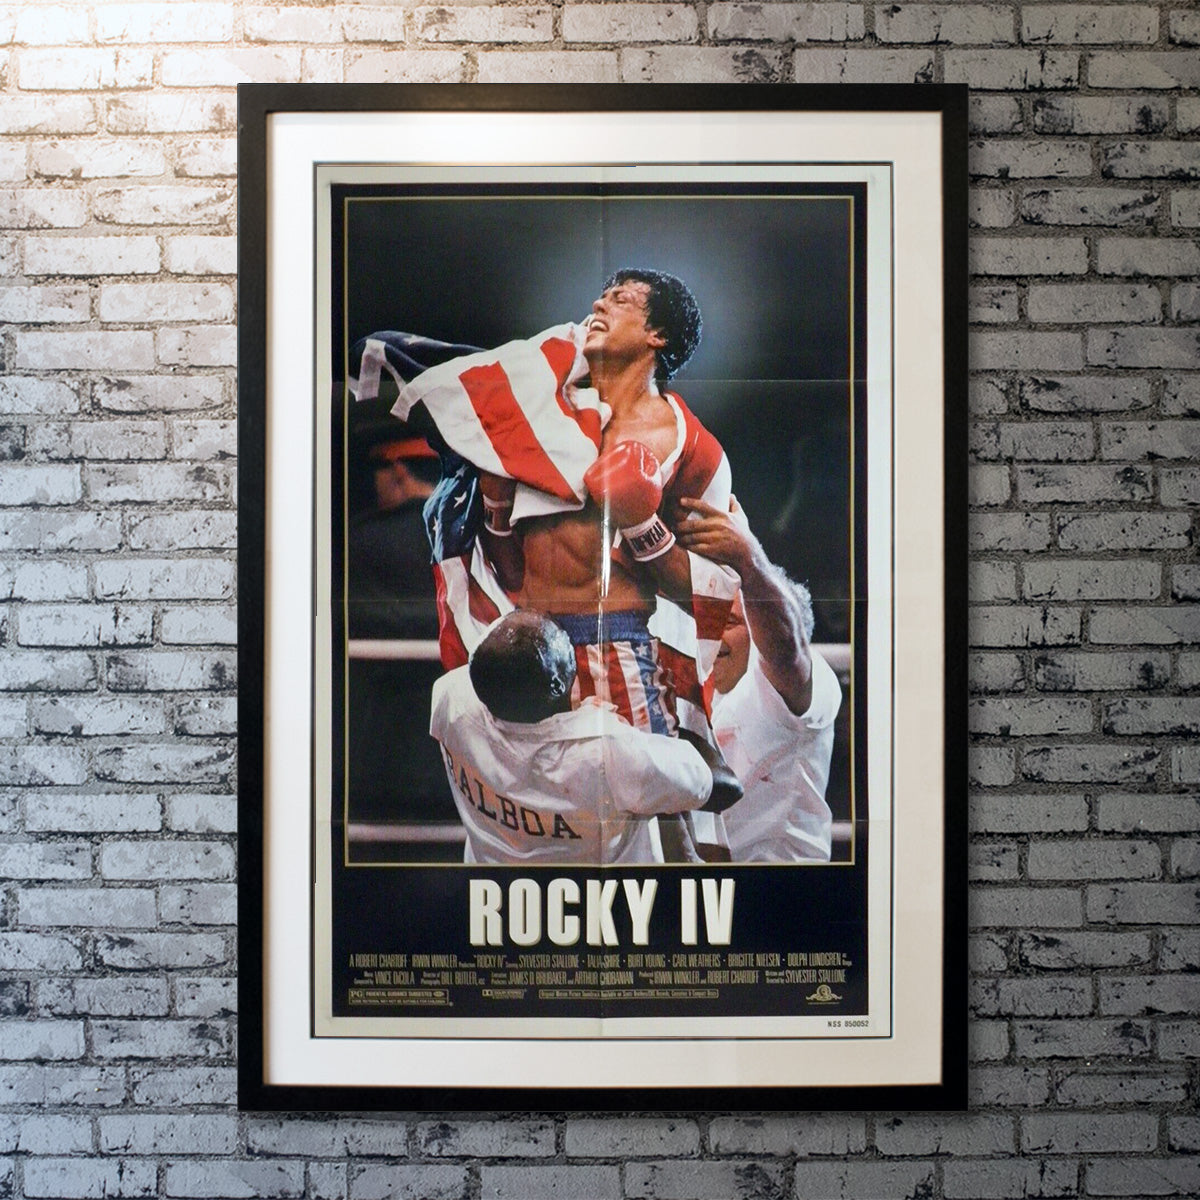 Original Movie Poster of Rocky Iv (1985)